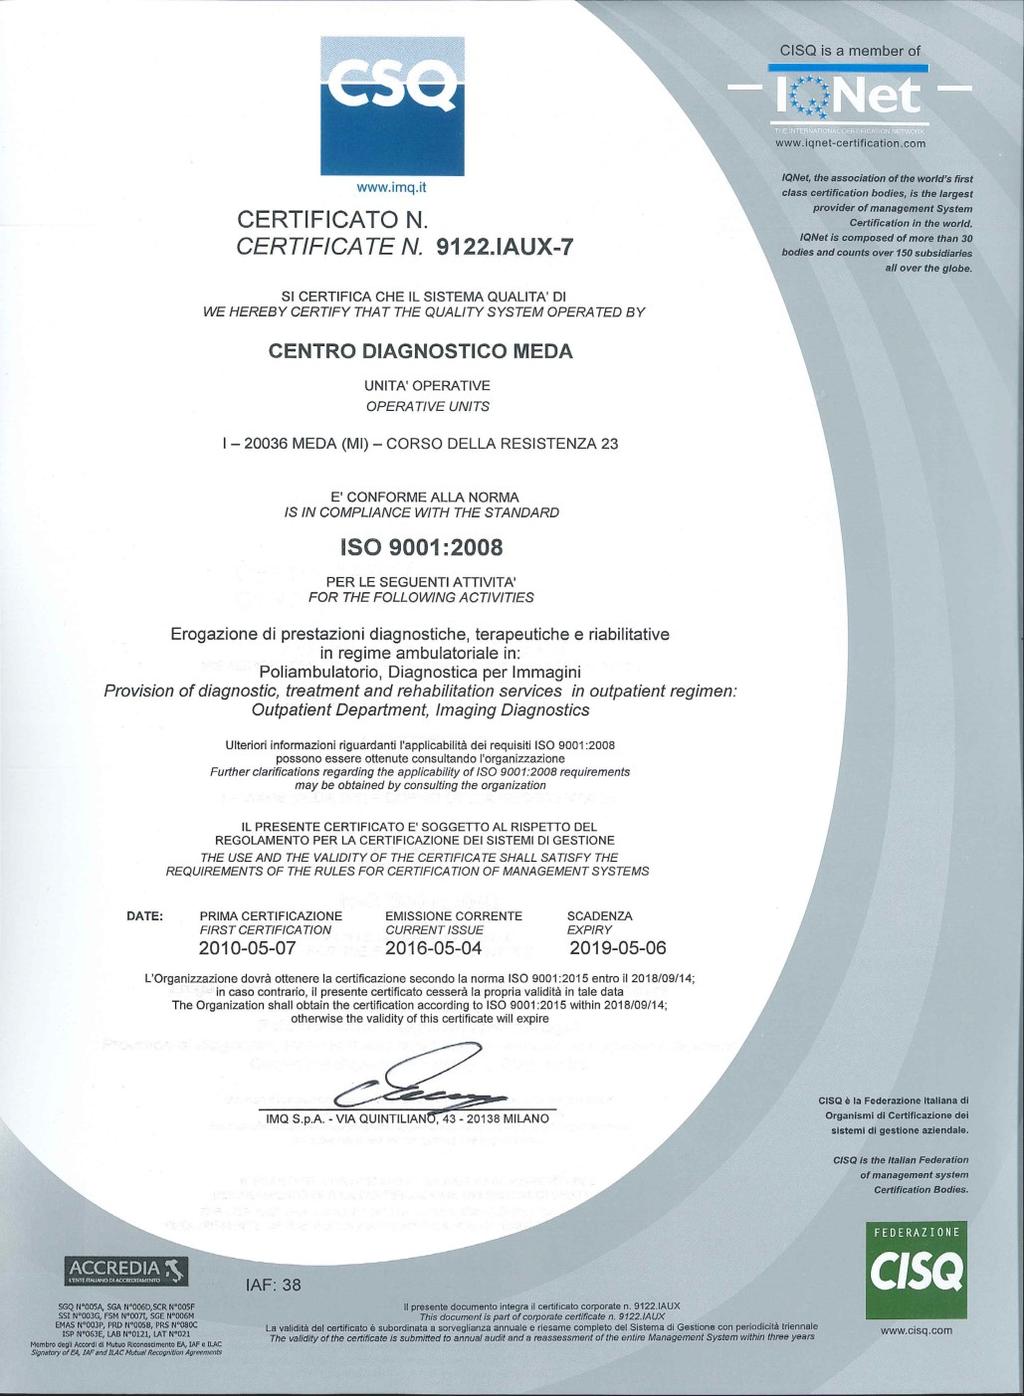 norma UNI EN ISO 9001:2008.